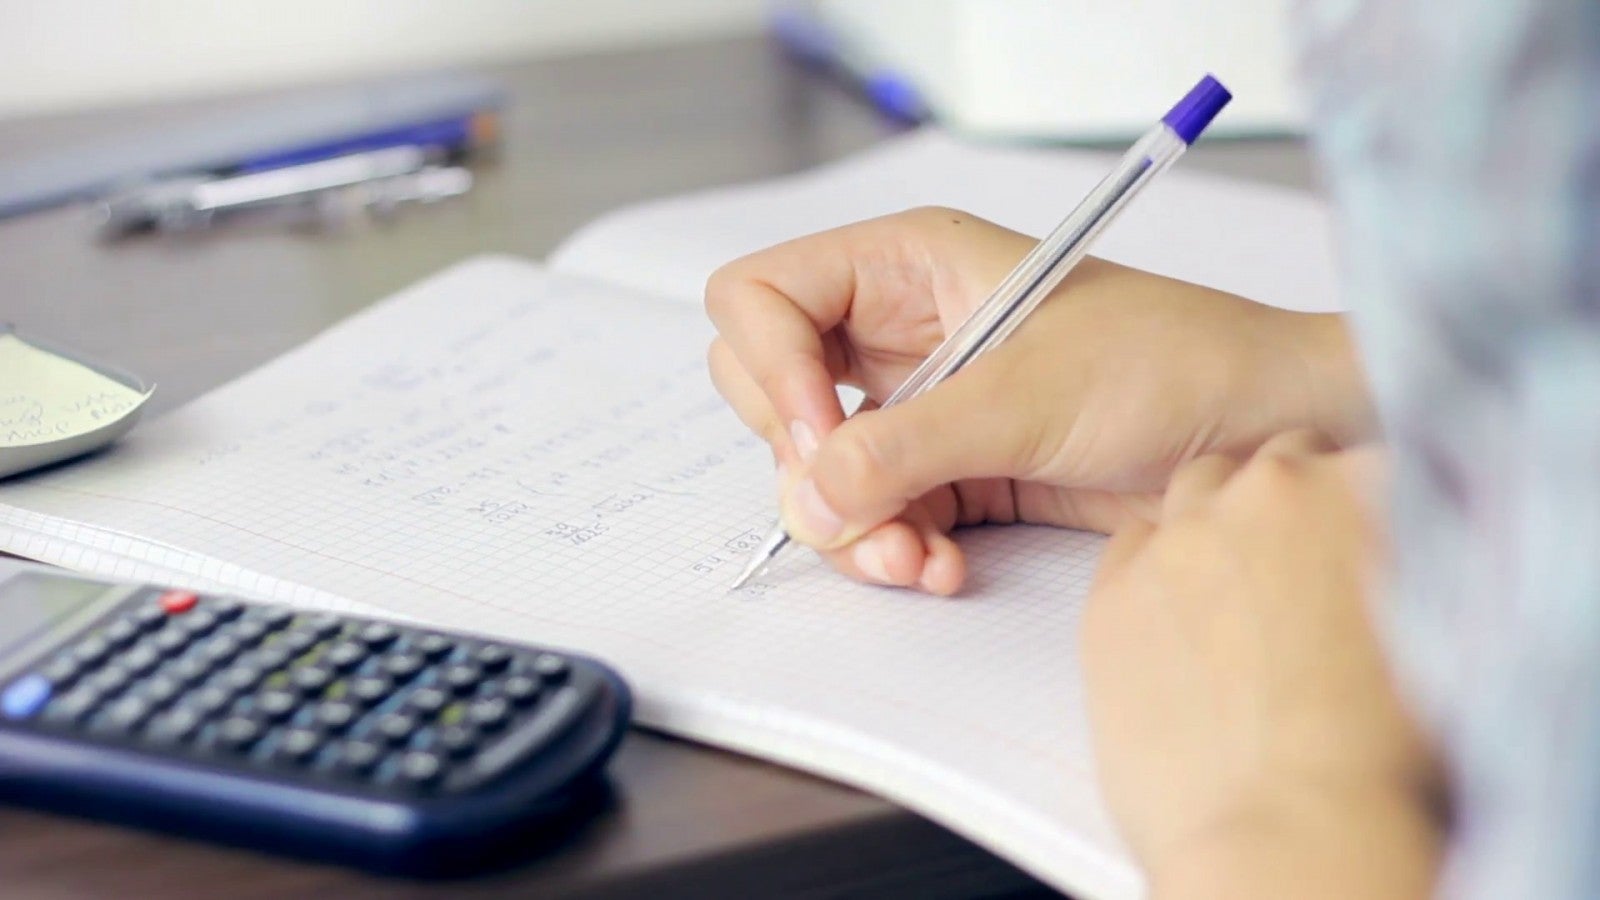 college student doing math homework calculating rjmyssuh F0000